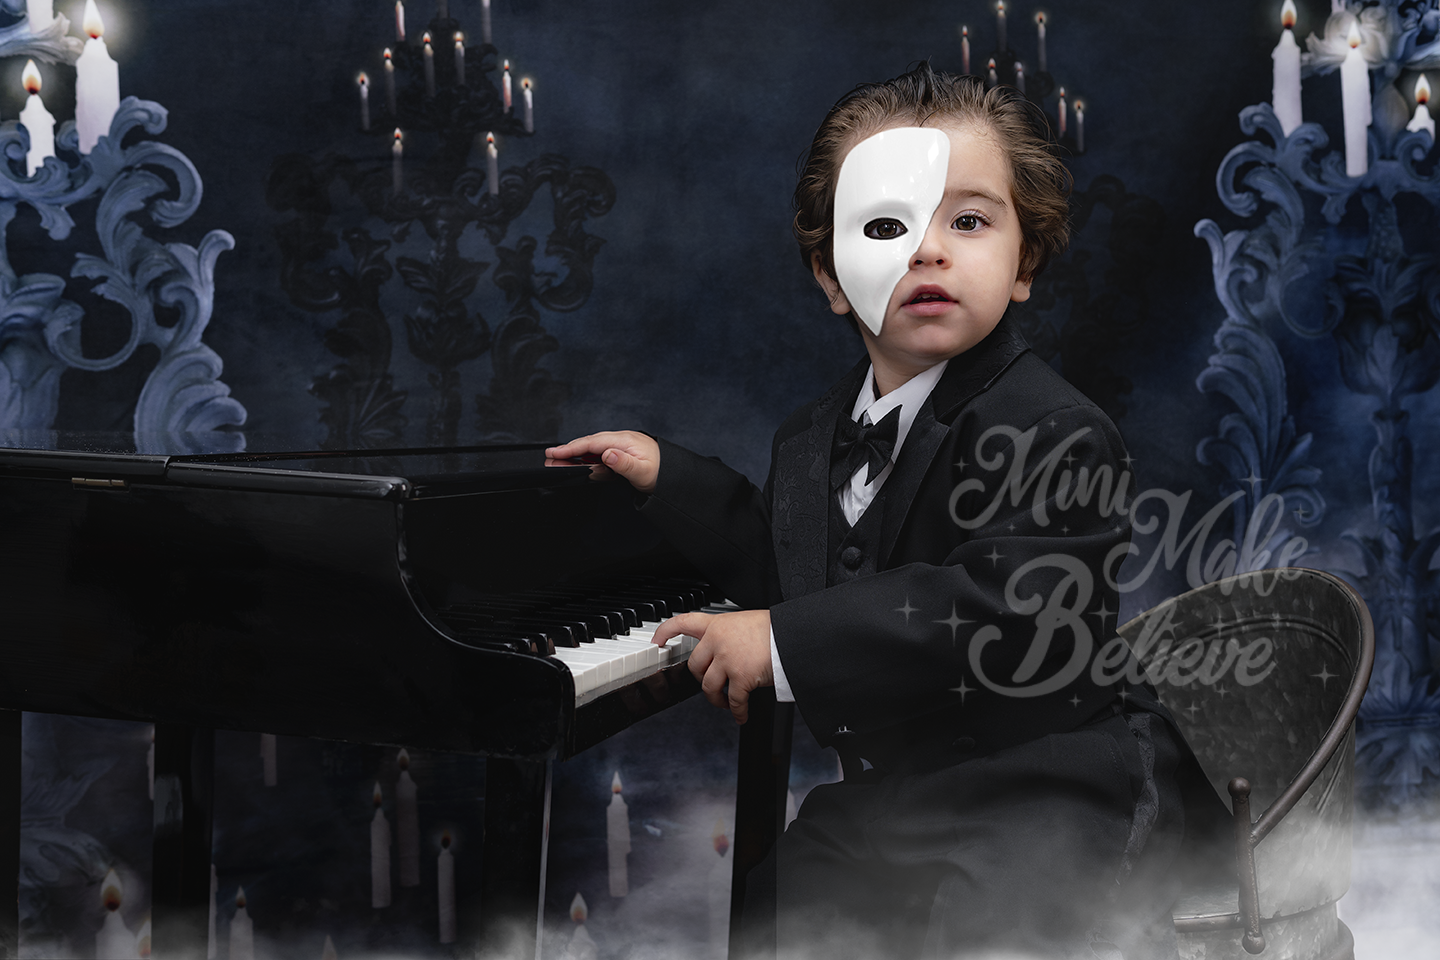 Kate Halloween Opera Phantom Night Music Backdrop for Photography Designed by Mini MakeBelieve